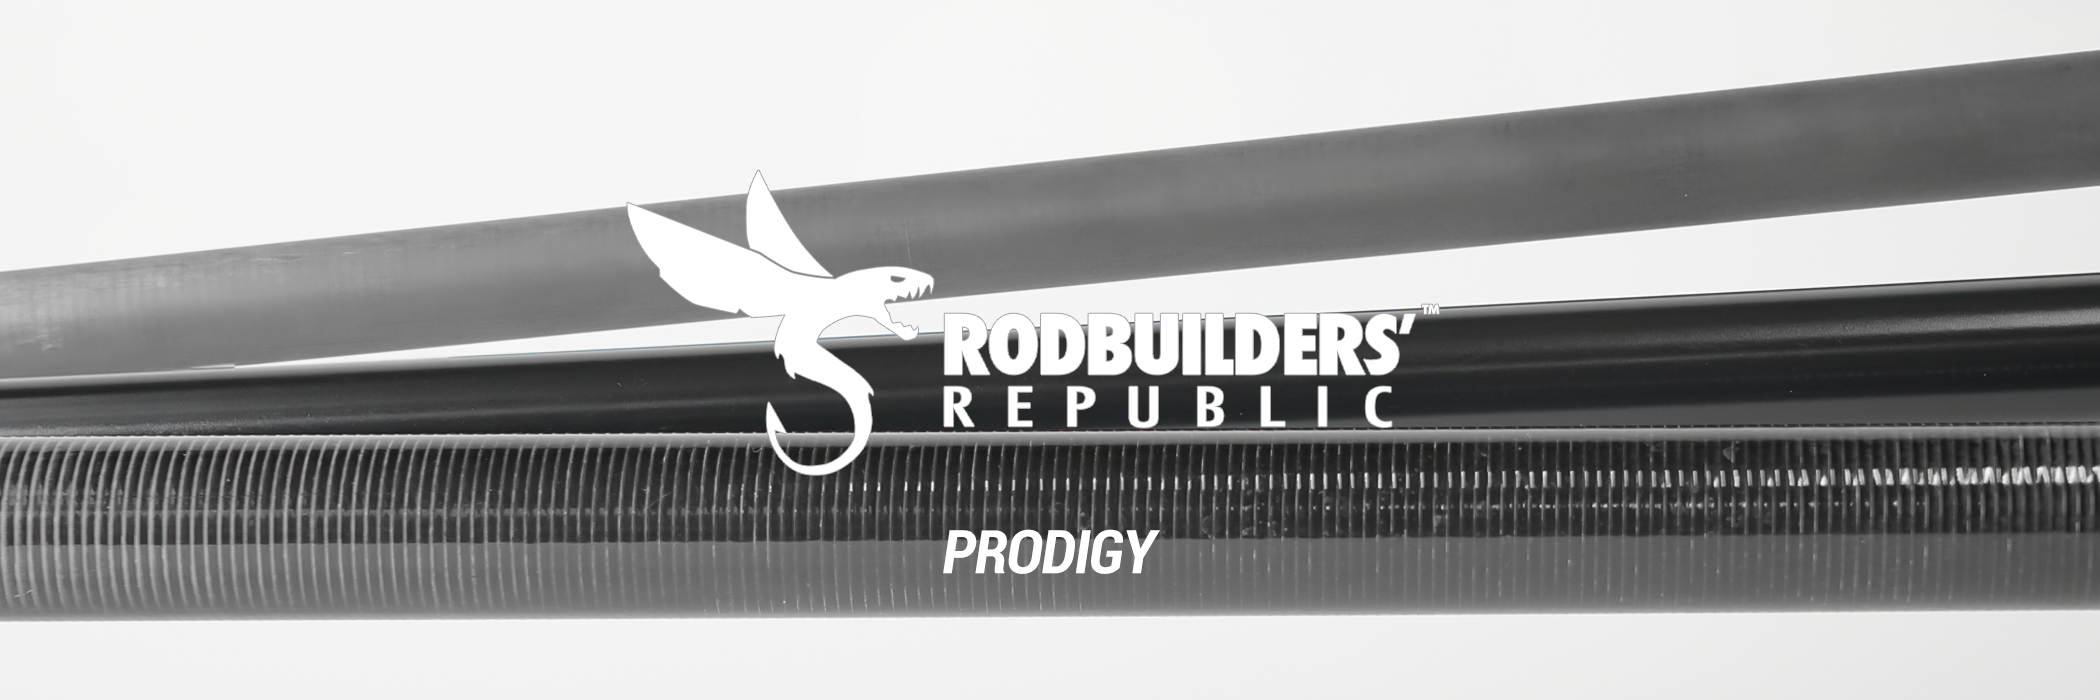 Rodbuilders' Republic - Prodigy